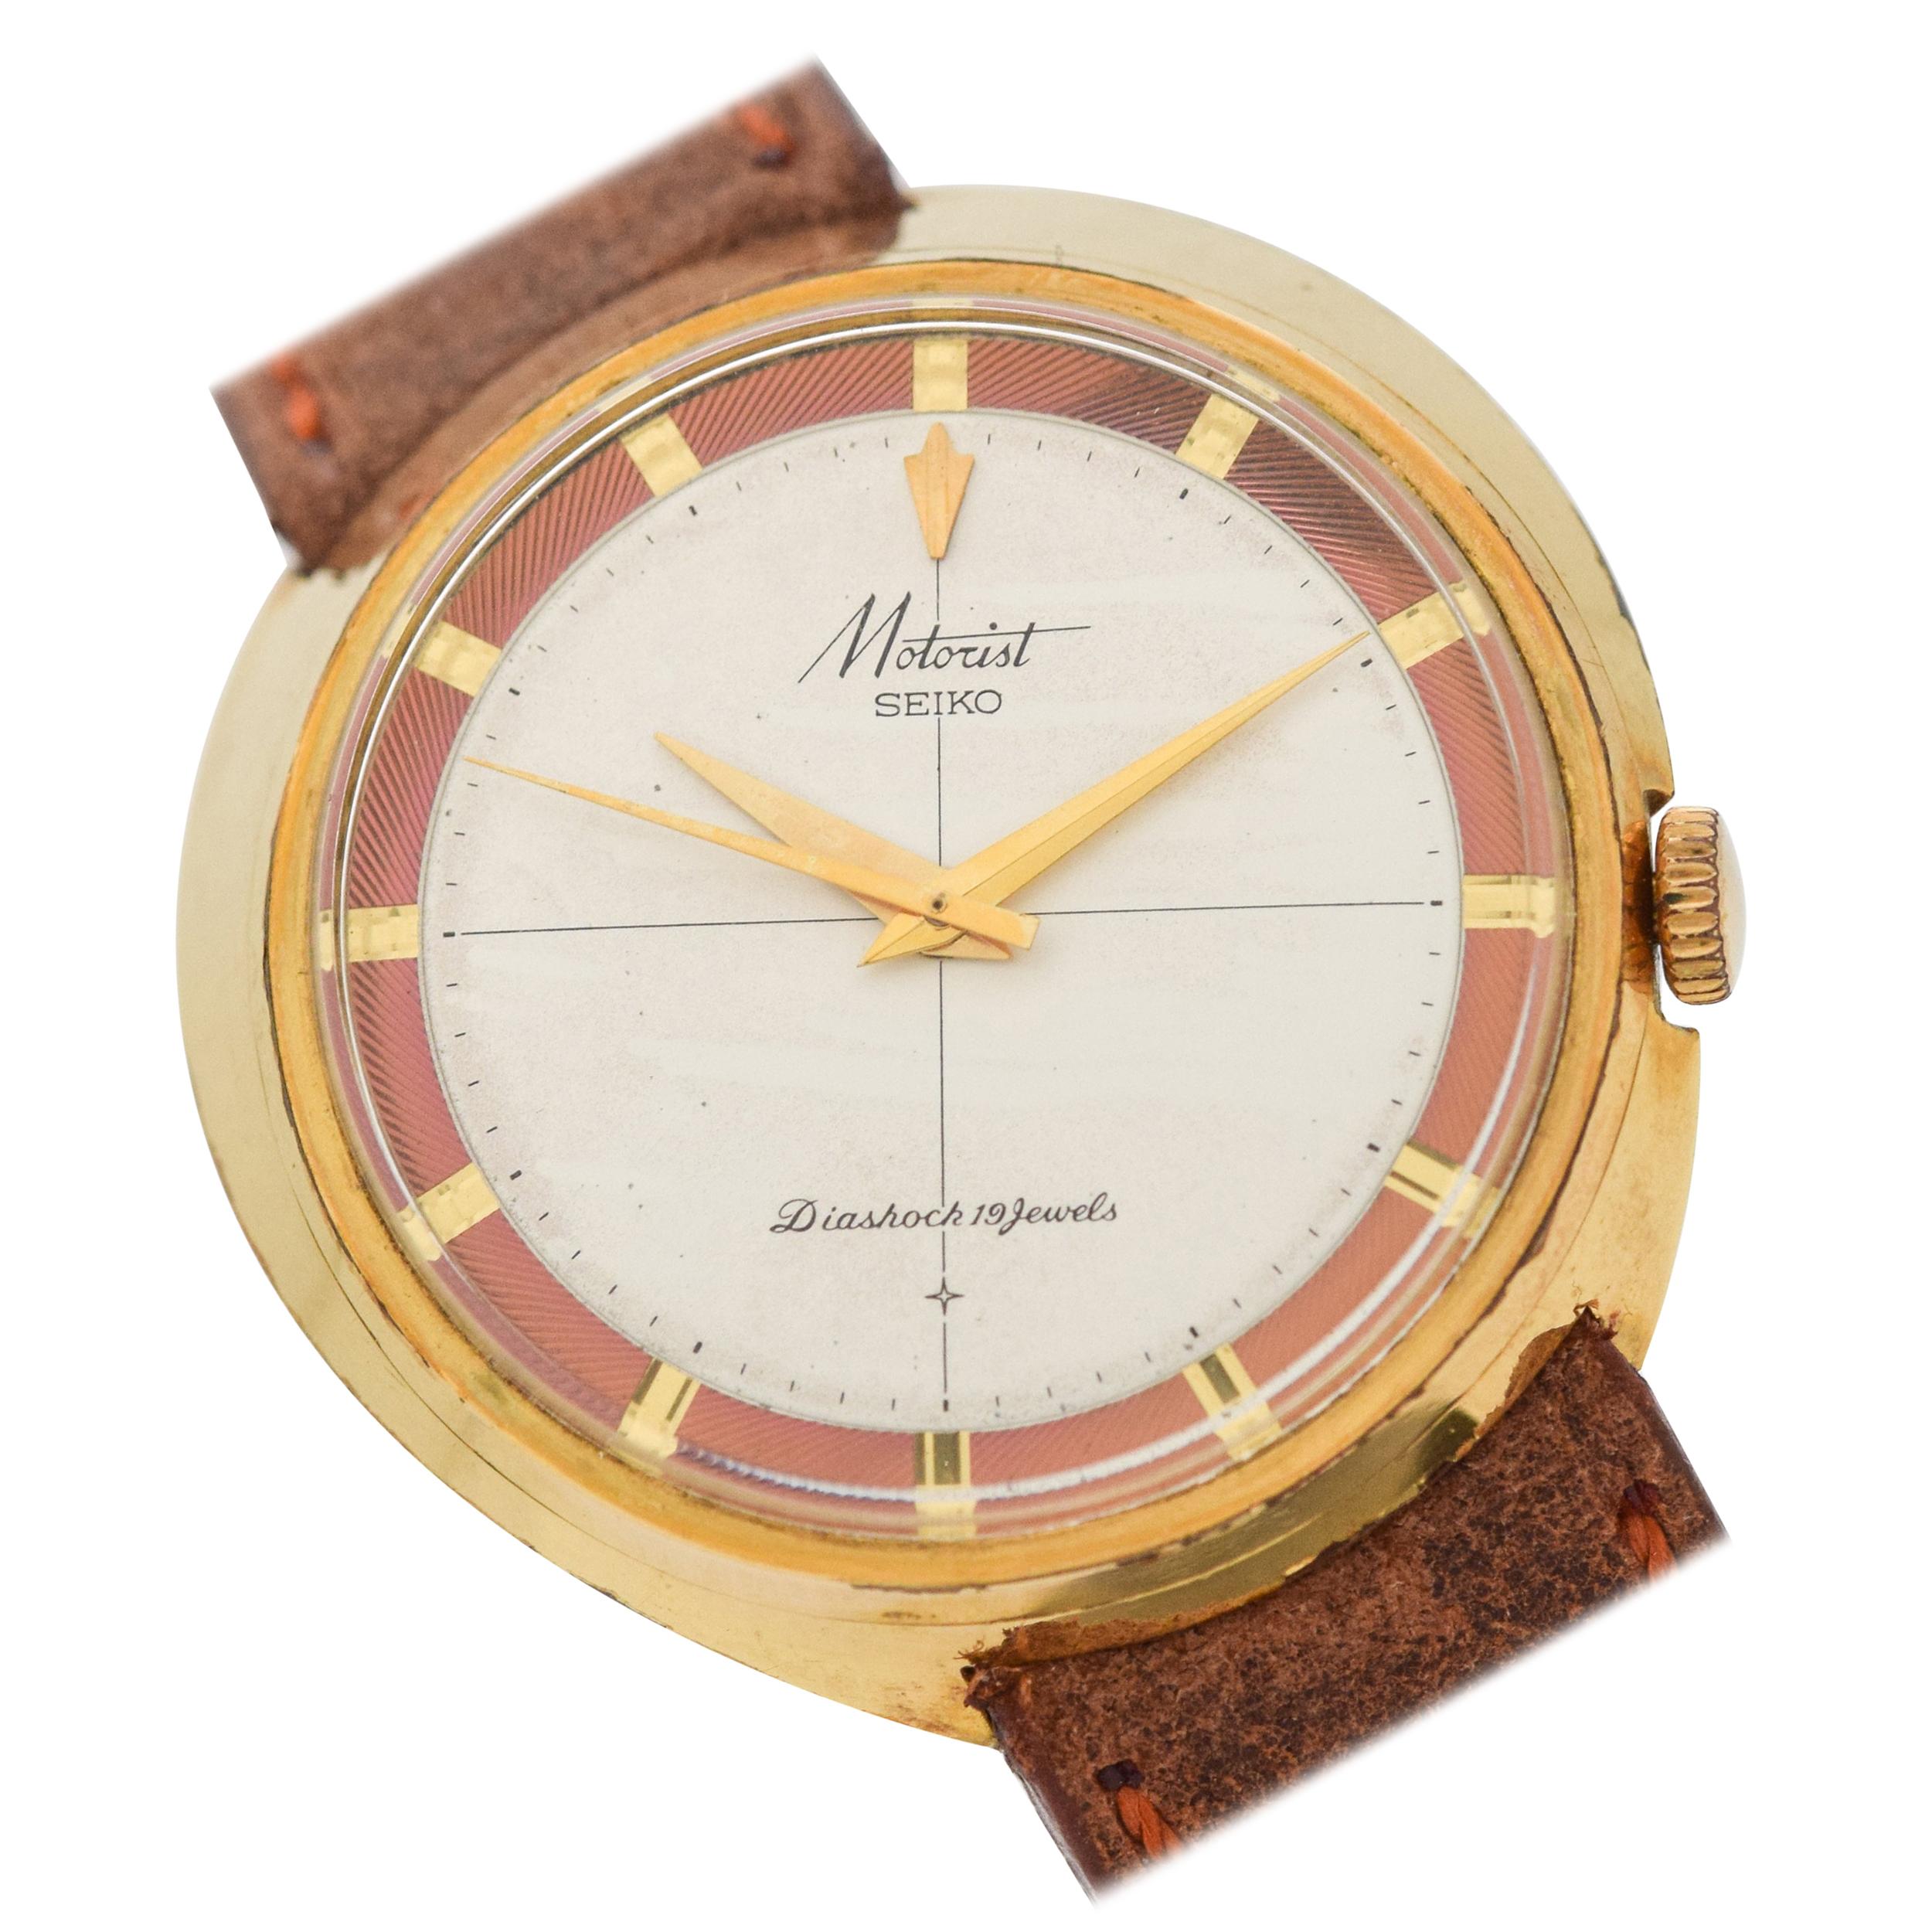 Seiko Vintage Watch - 7 For Sale on 1stDibs | old seiko 5 automatic watches  price, vintage seiko 5, seiko 5 automatic vintage